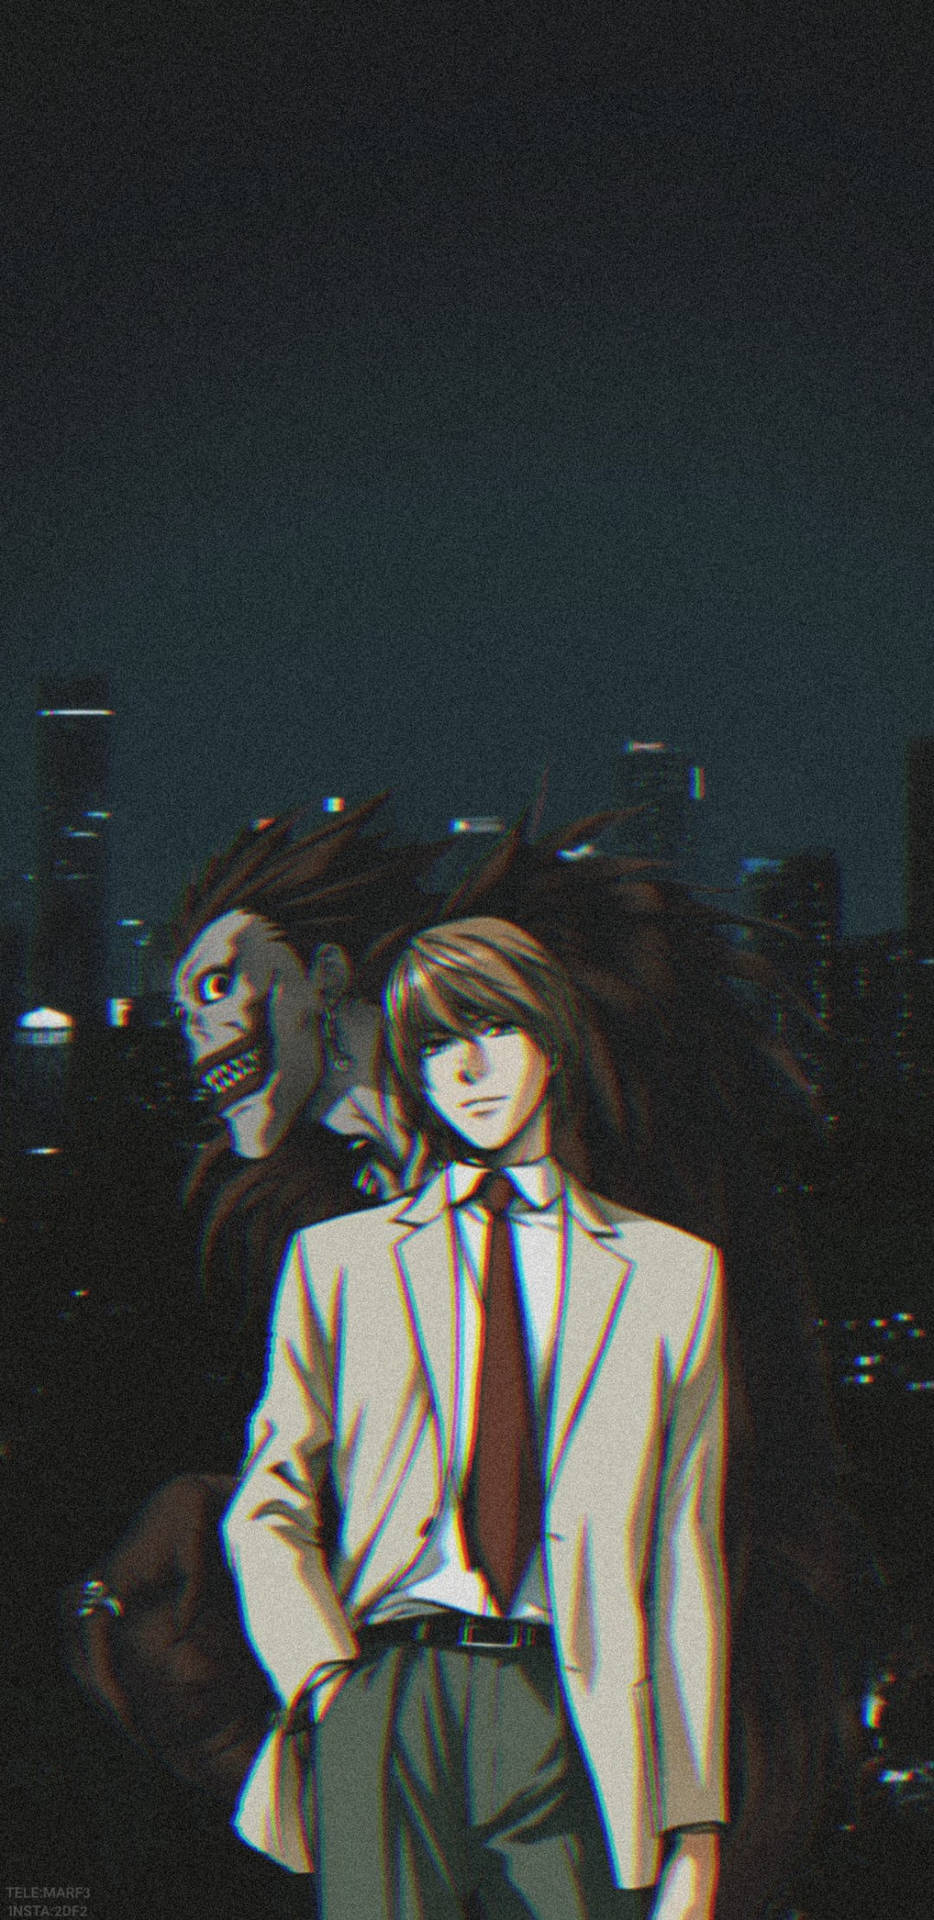 Light, Ryuk, And City Death Note Phone Background